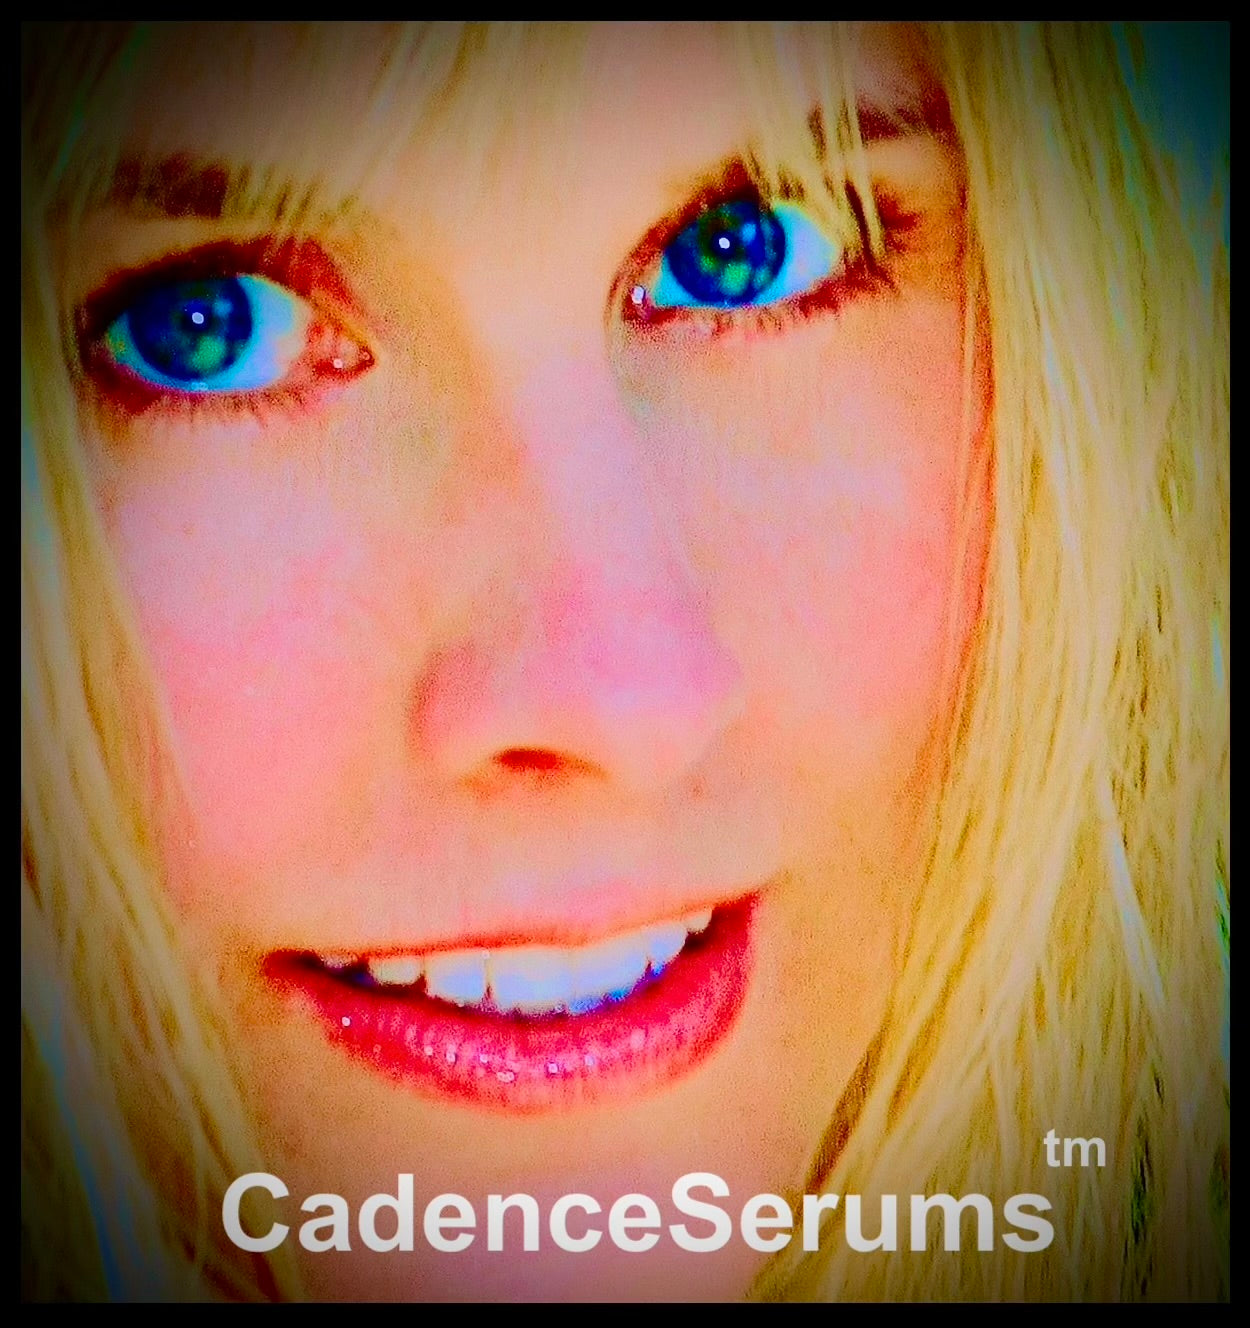 CadenceSerums & CadenceSpaldingSerum brands